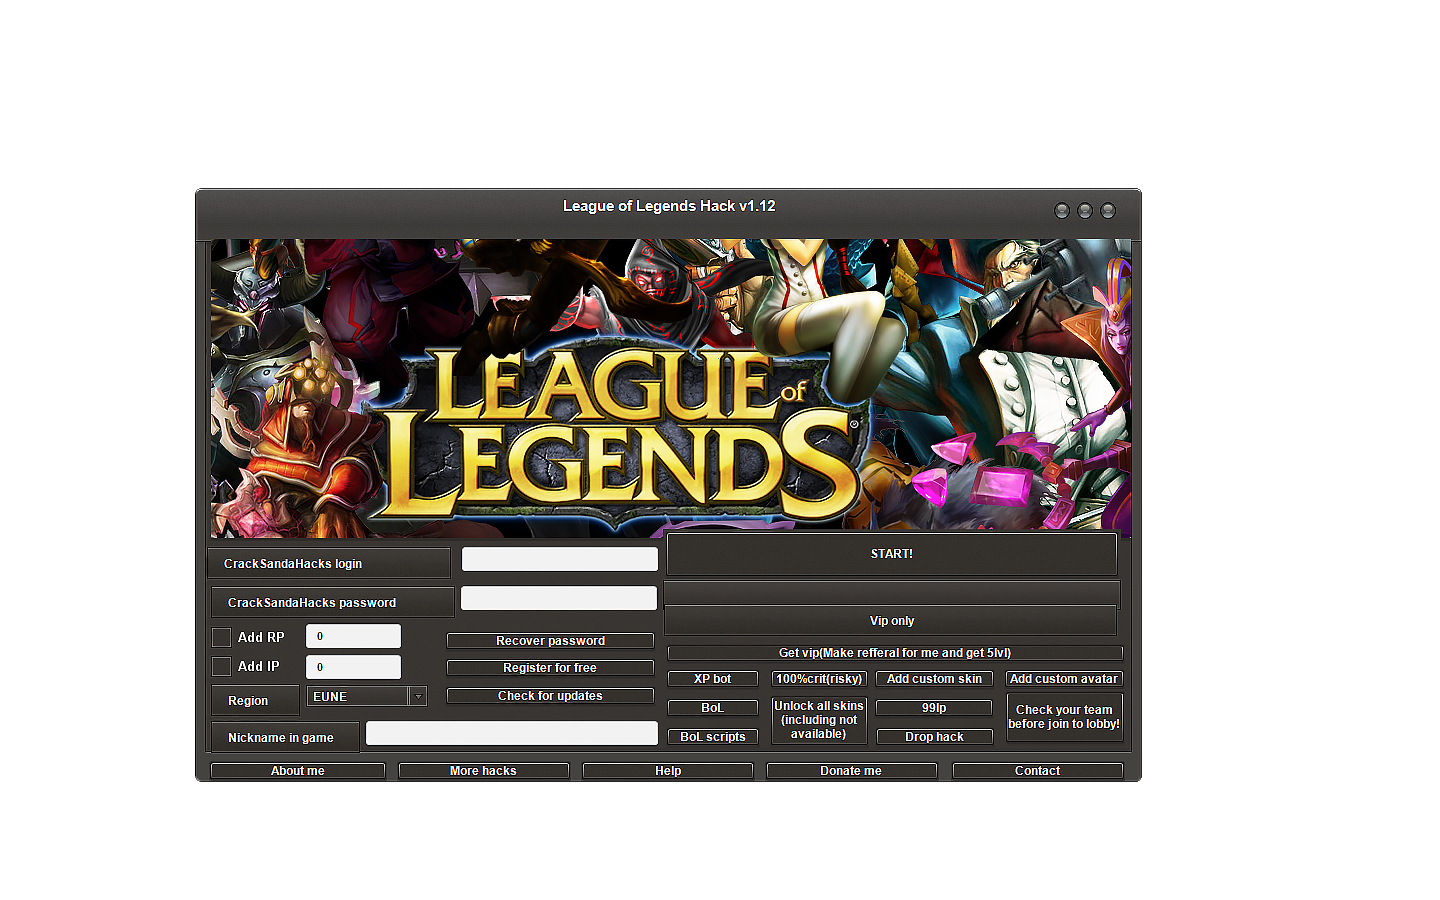 League of legends hack rp download 2015 free